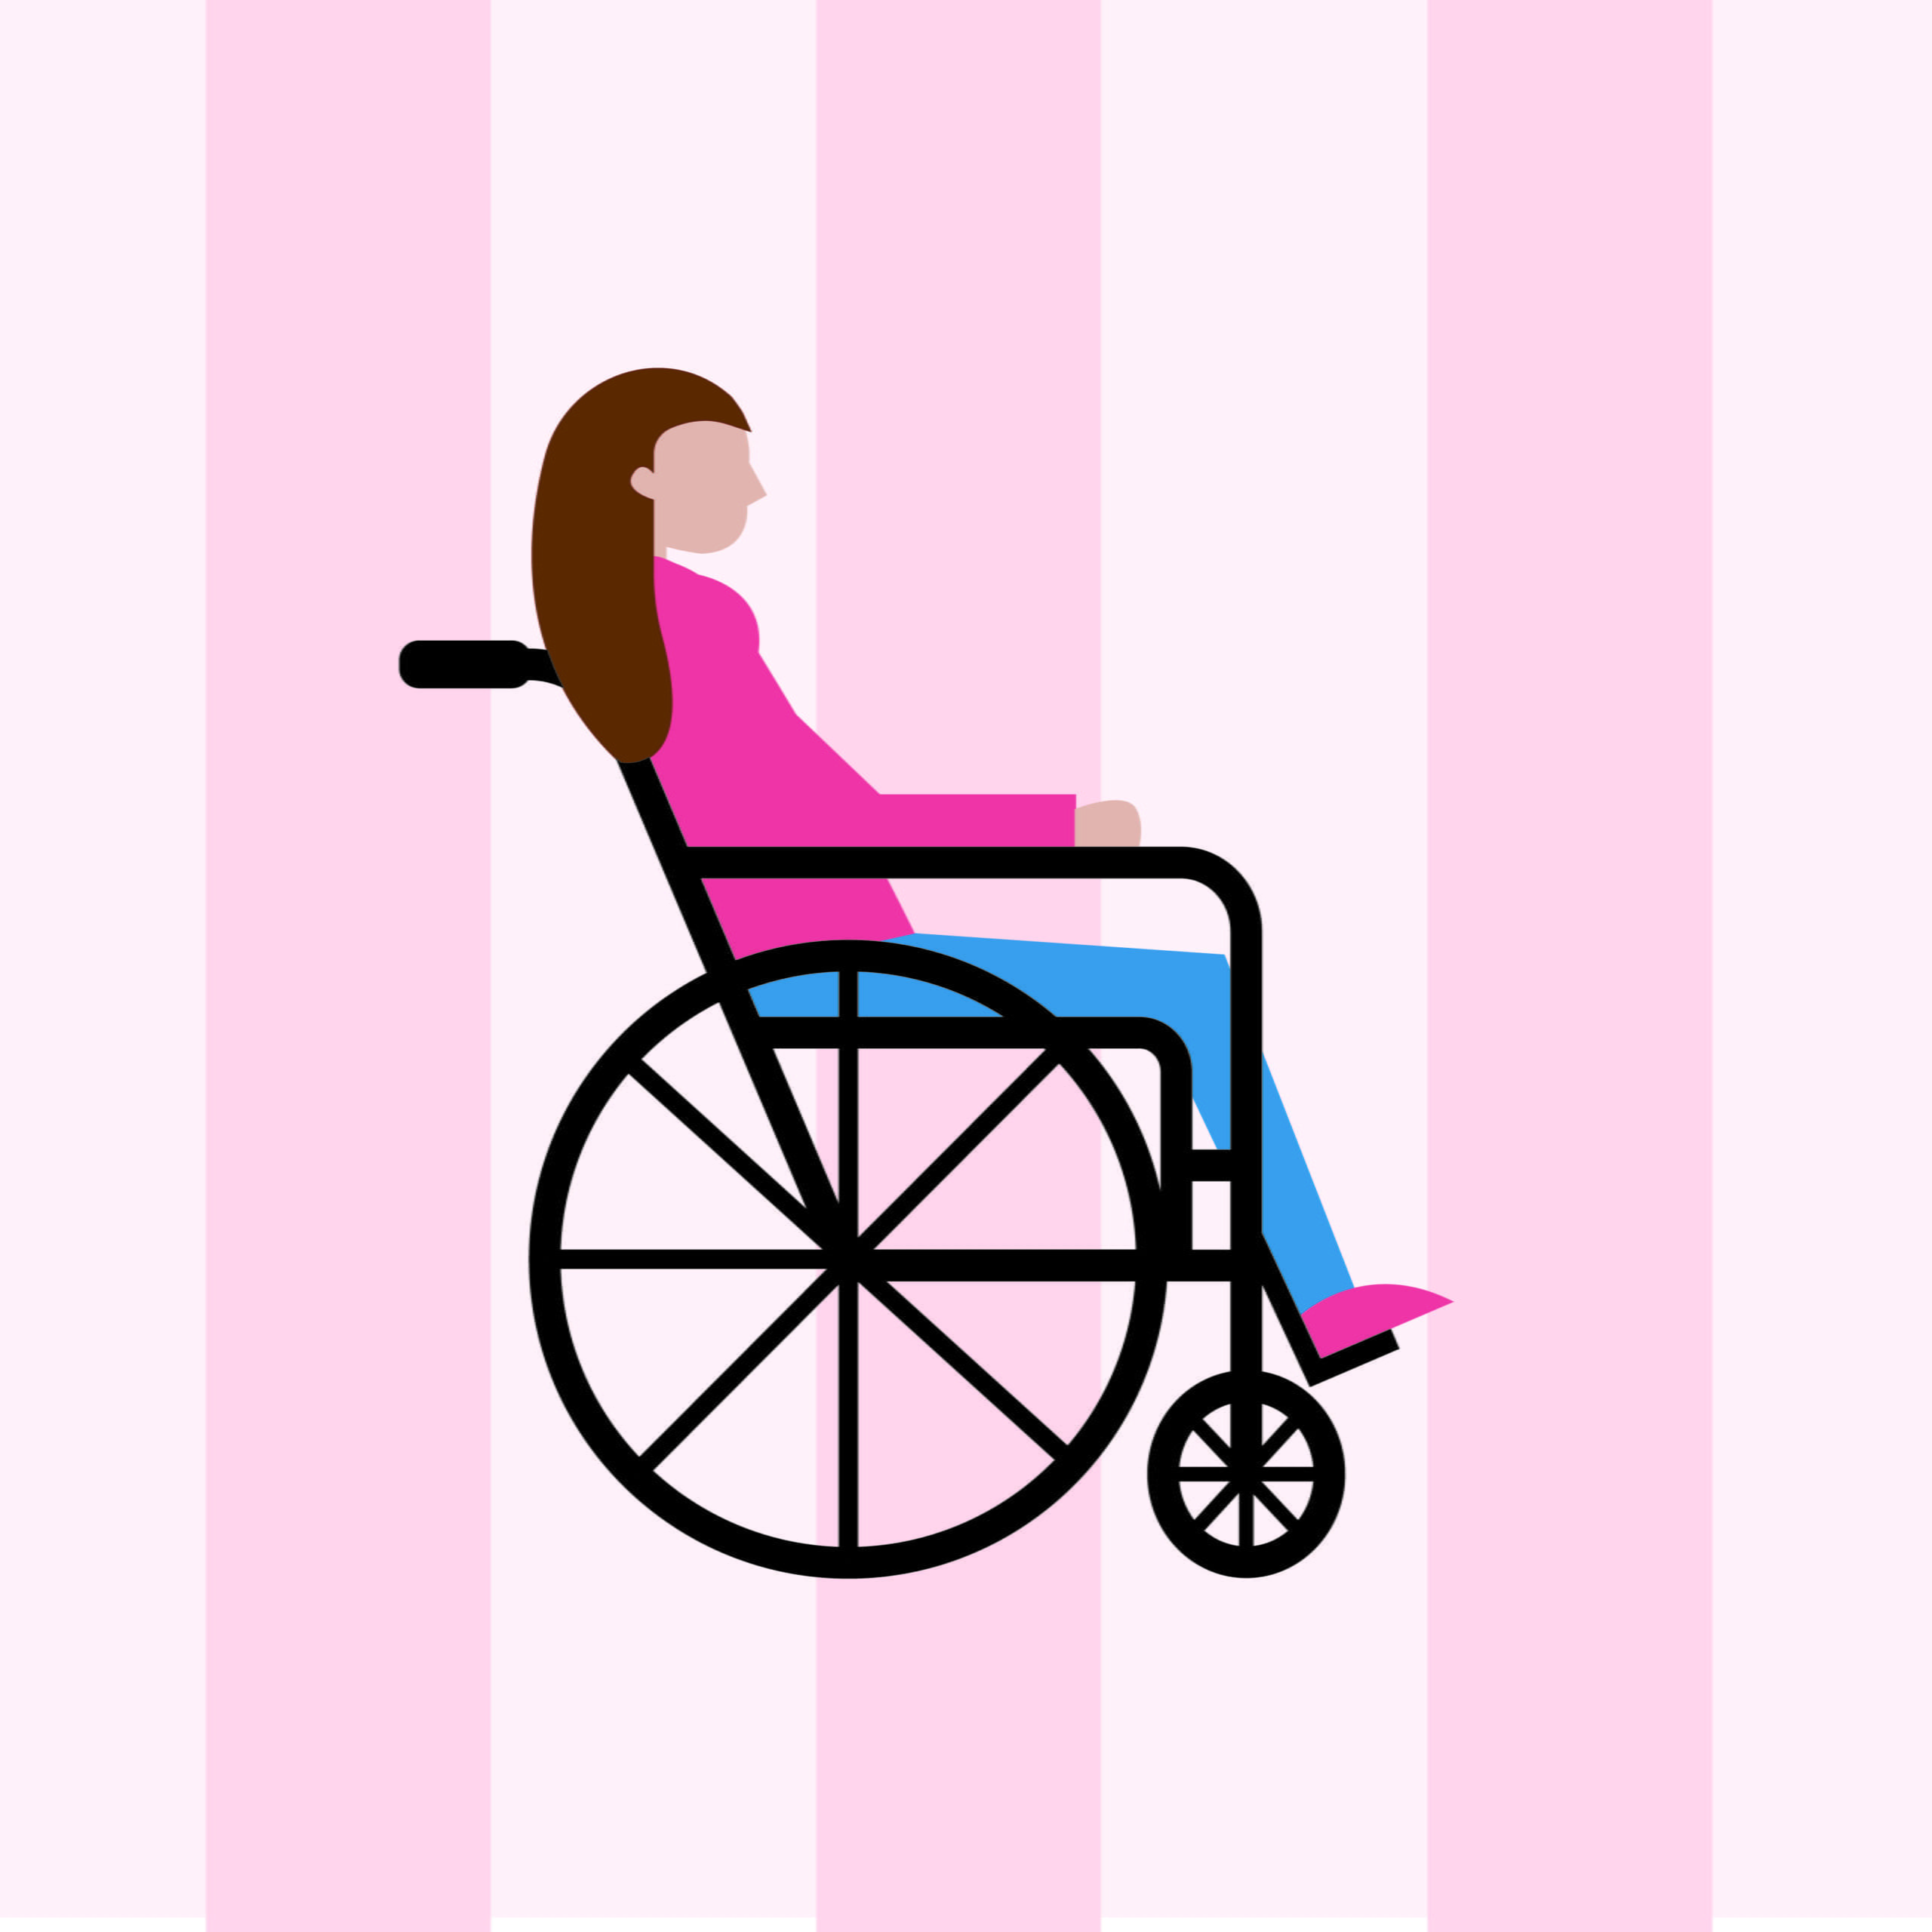 HEALTH (cerebral palsy) article illustration by Rita azar for 360 magazine